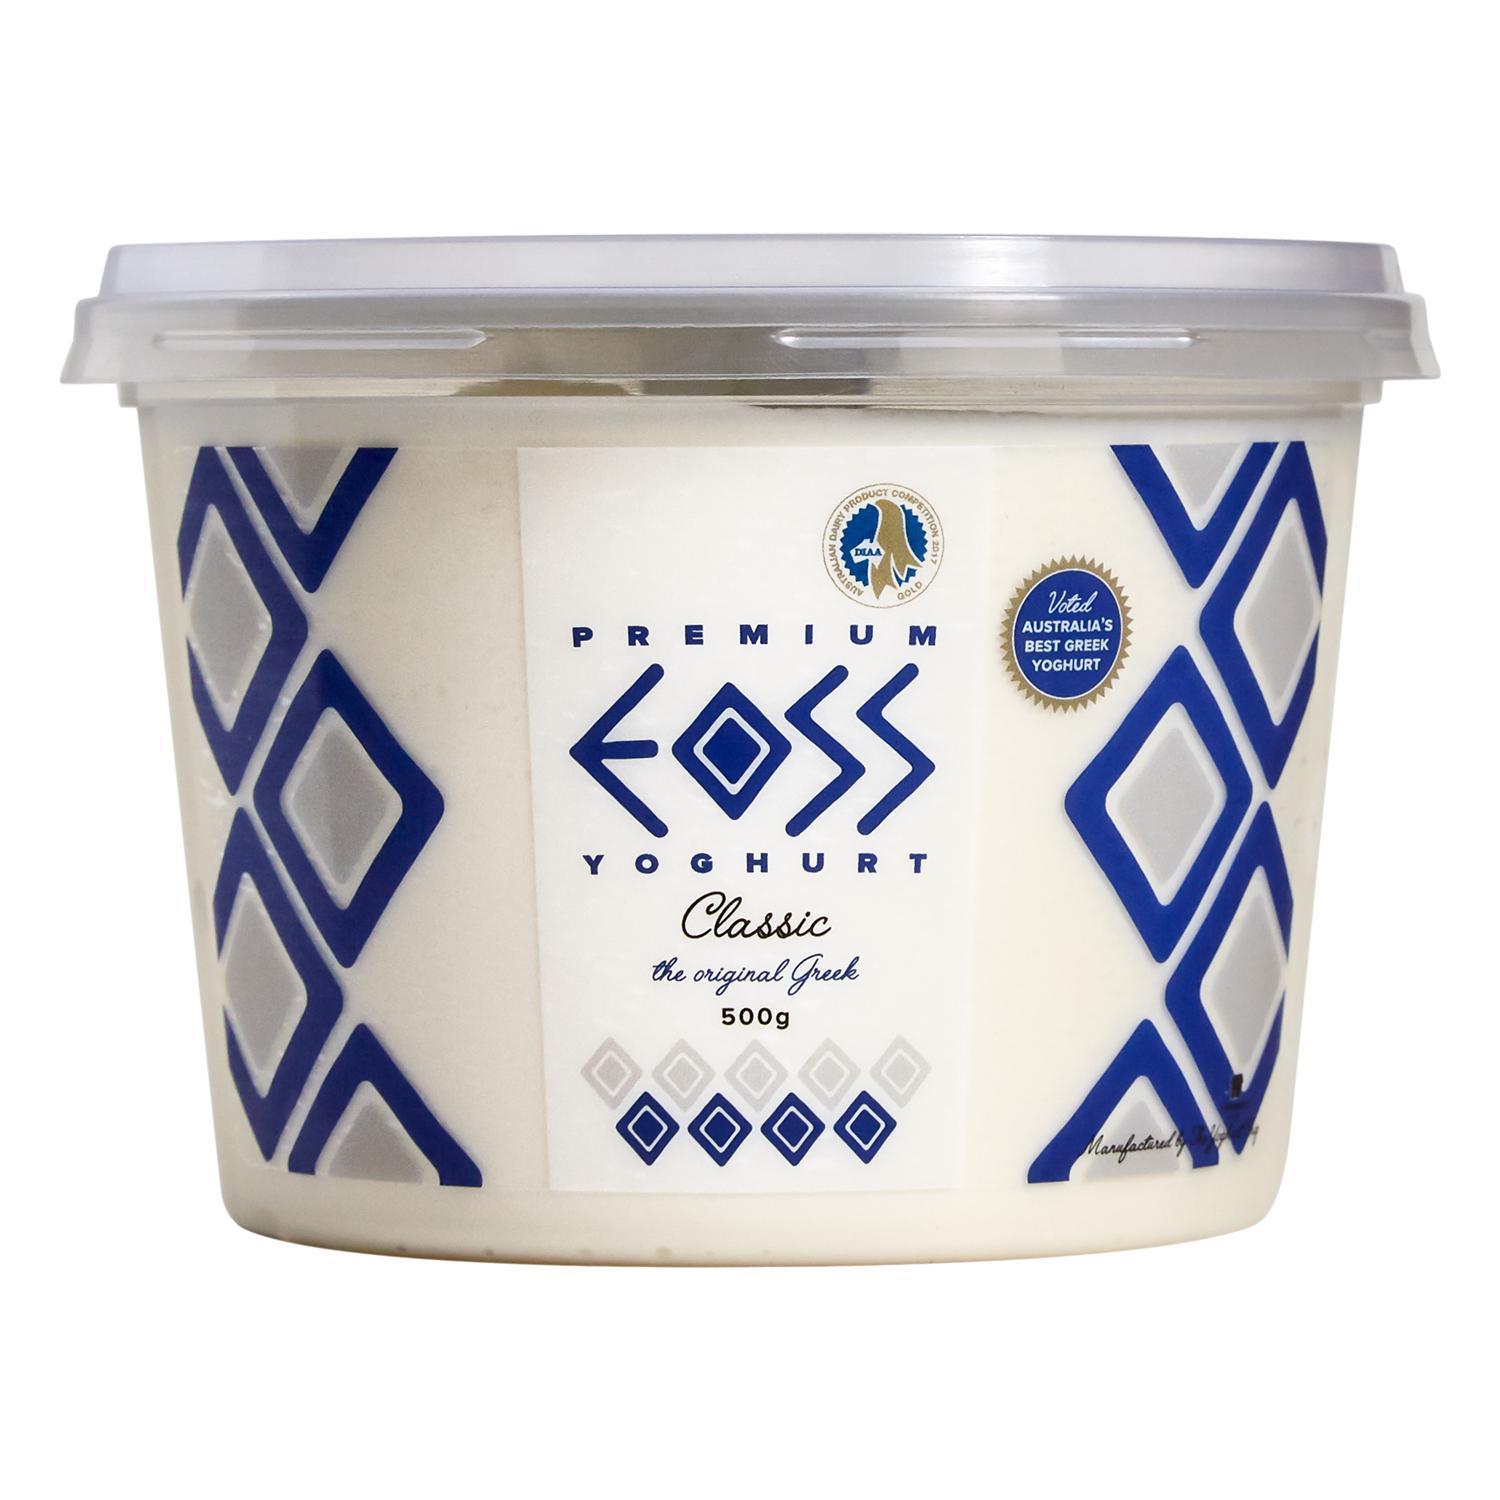 EOSS Yoghurt - Classic